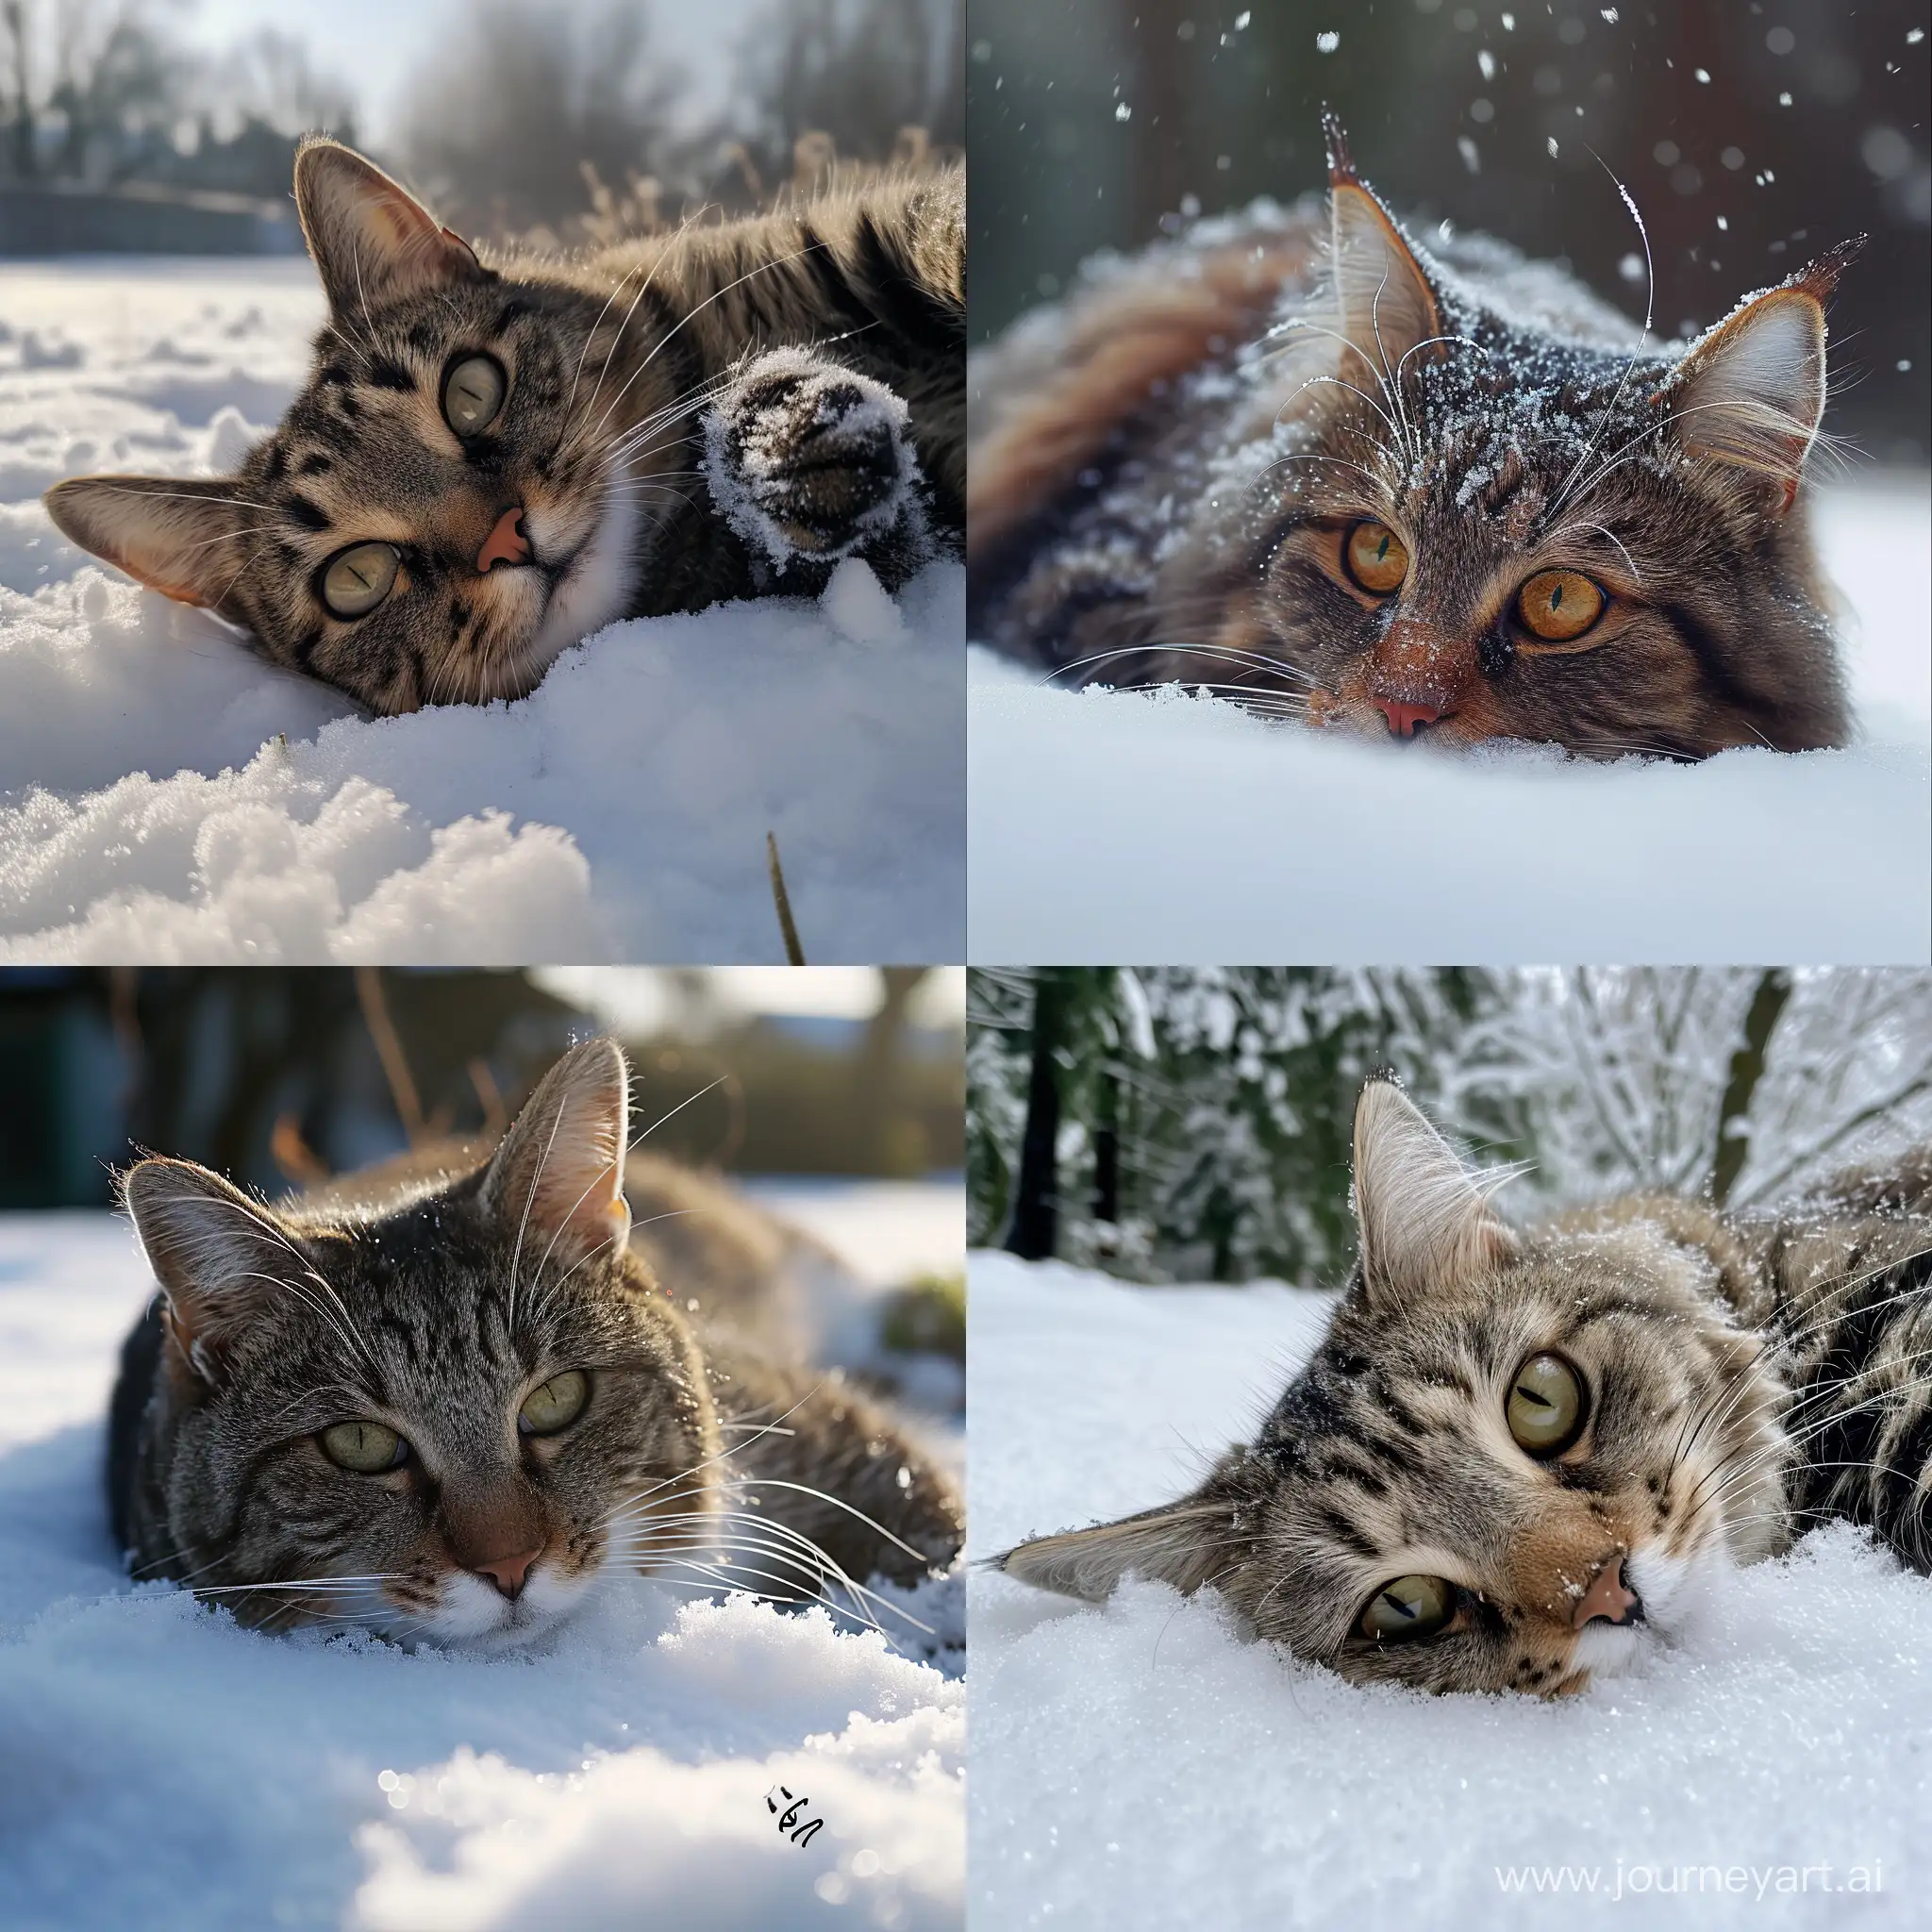 Adorable-Twix-Cat-Enjoying-a-Snowy-Day